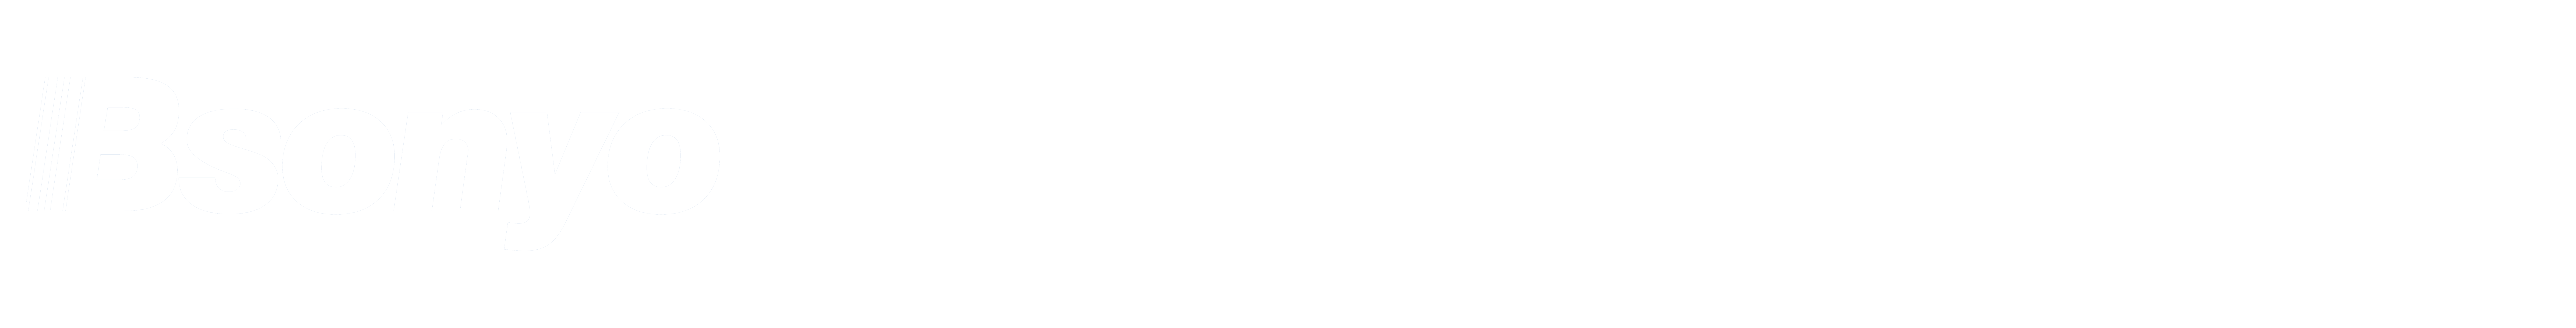  Sonyo Compressor (Dalian) Co., Ltd.